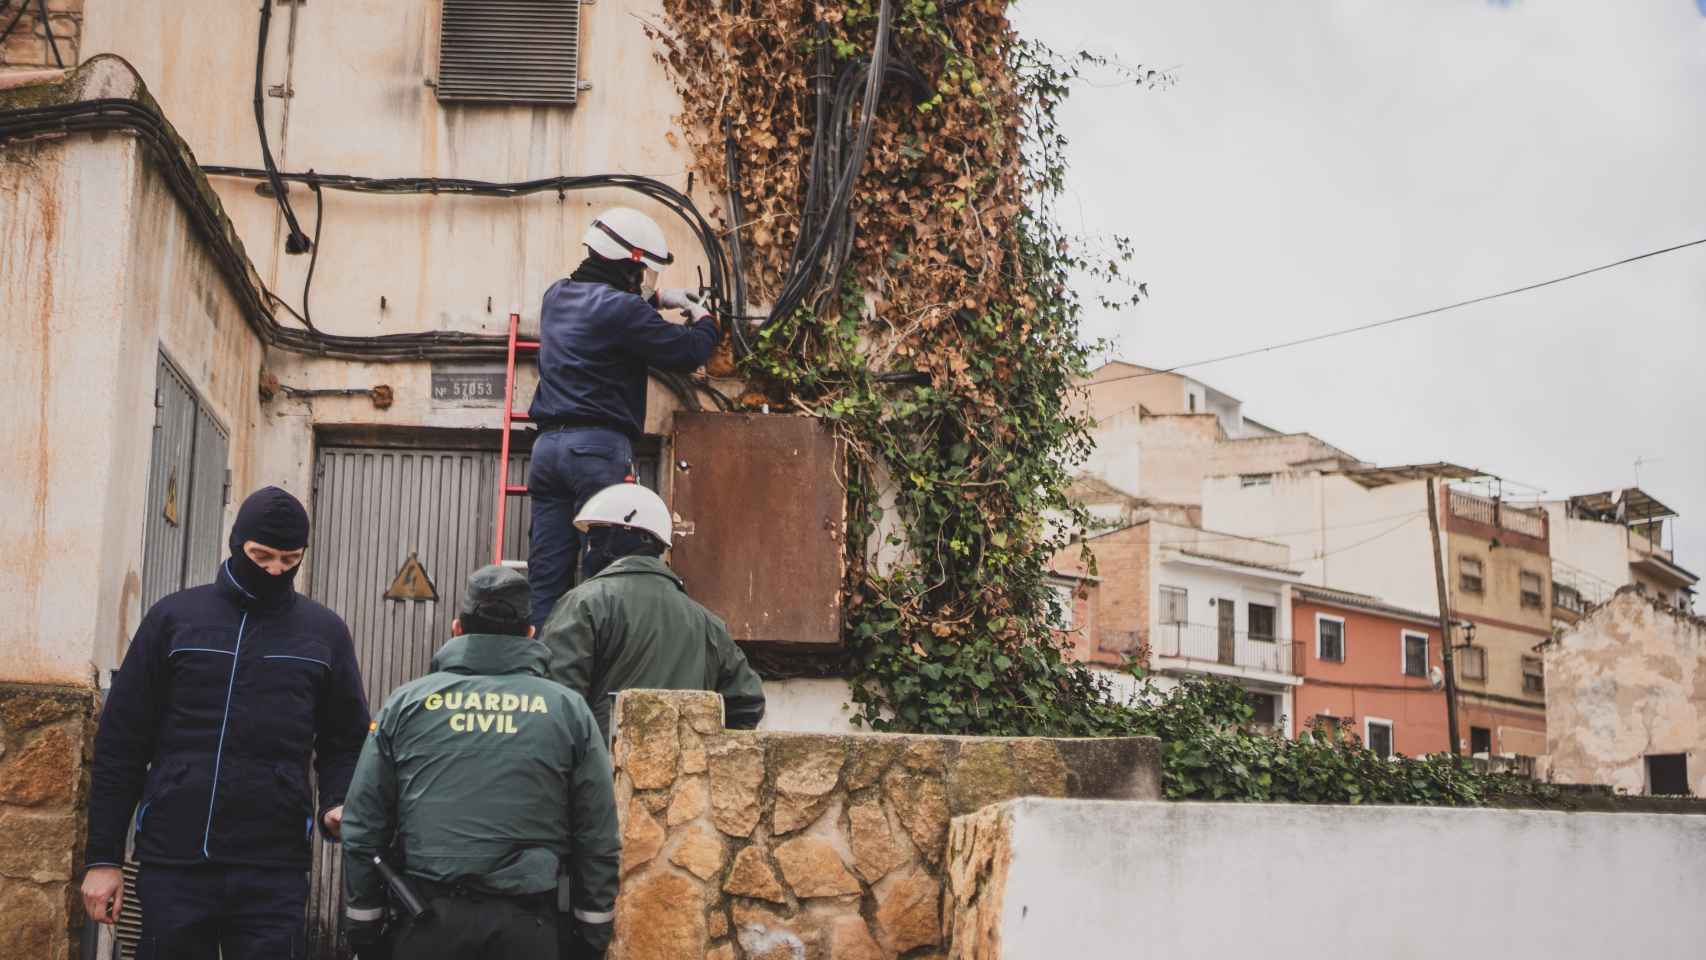 Técnicos de Endesa cubiertos con pasamontañas desinstalan cables que captan luz ilegal acompañados por la Guardia Civil.